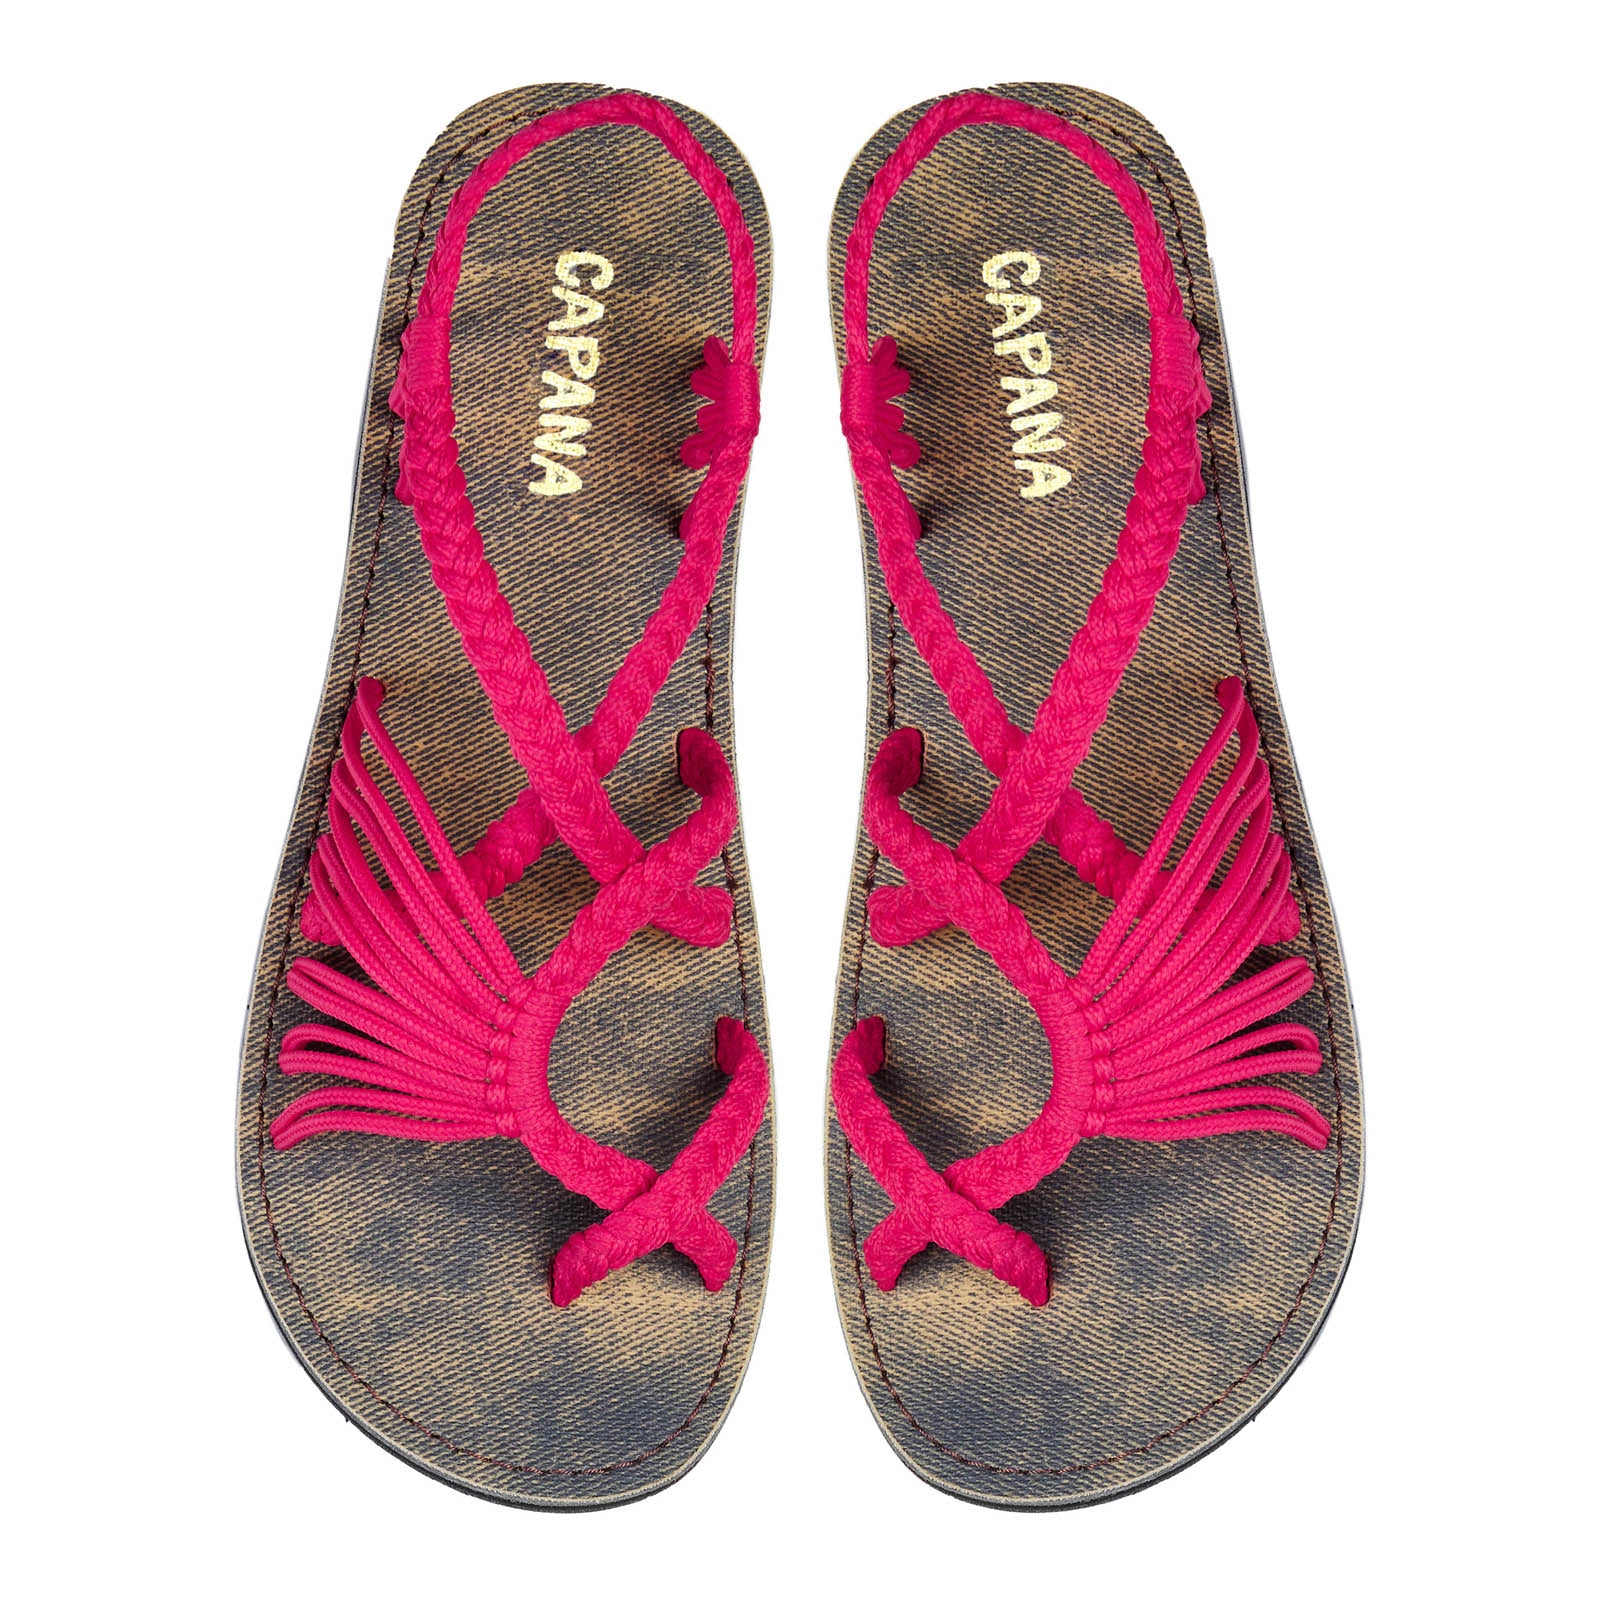 Banyan Pink Jeans Rope Sandals Flamingo Crisscross design